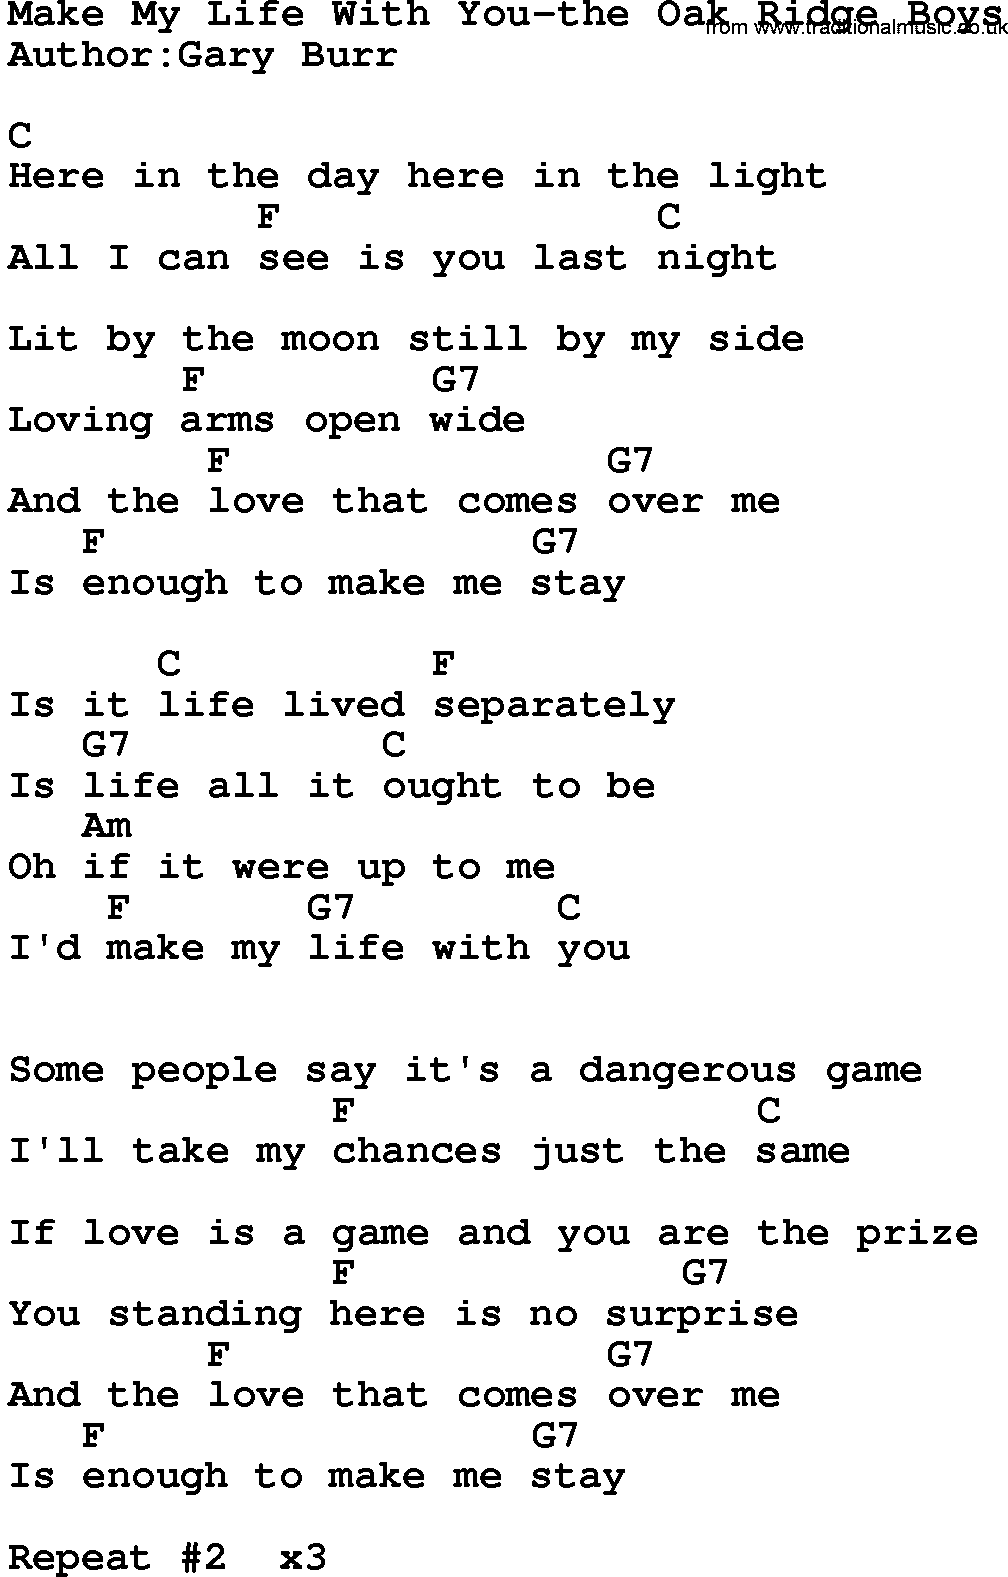 country music lyrics about life